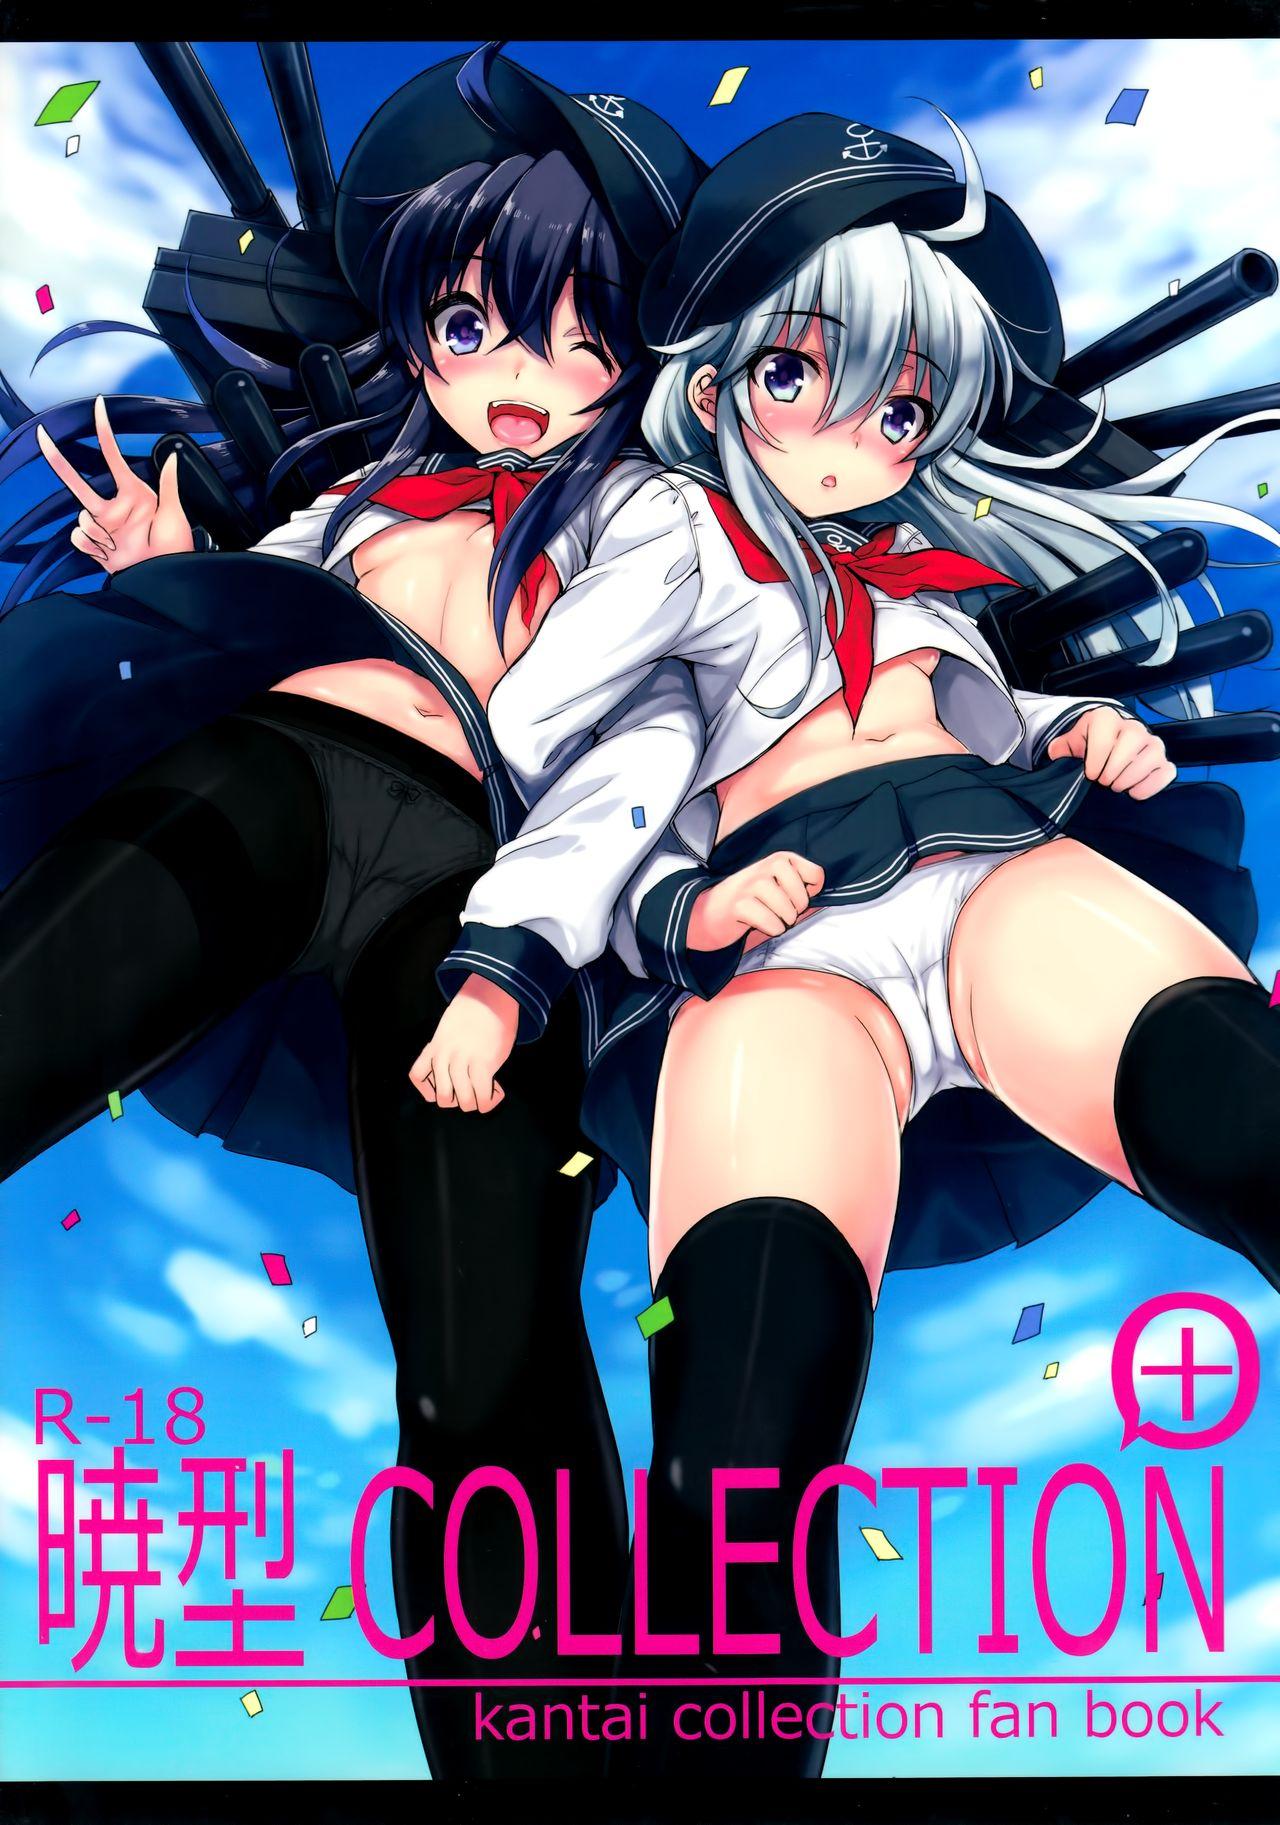 Akatsuki-gata Collection+ 1